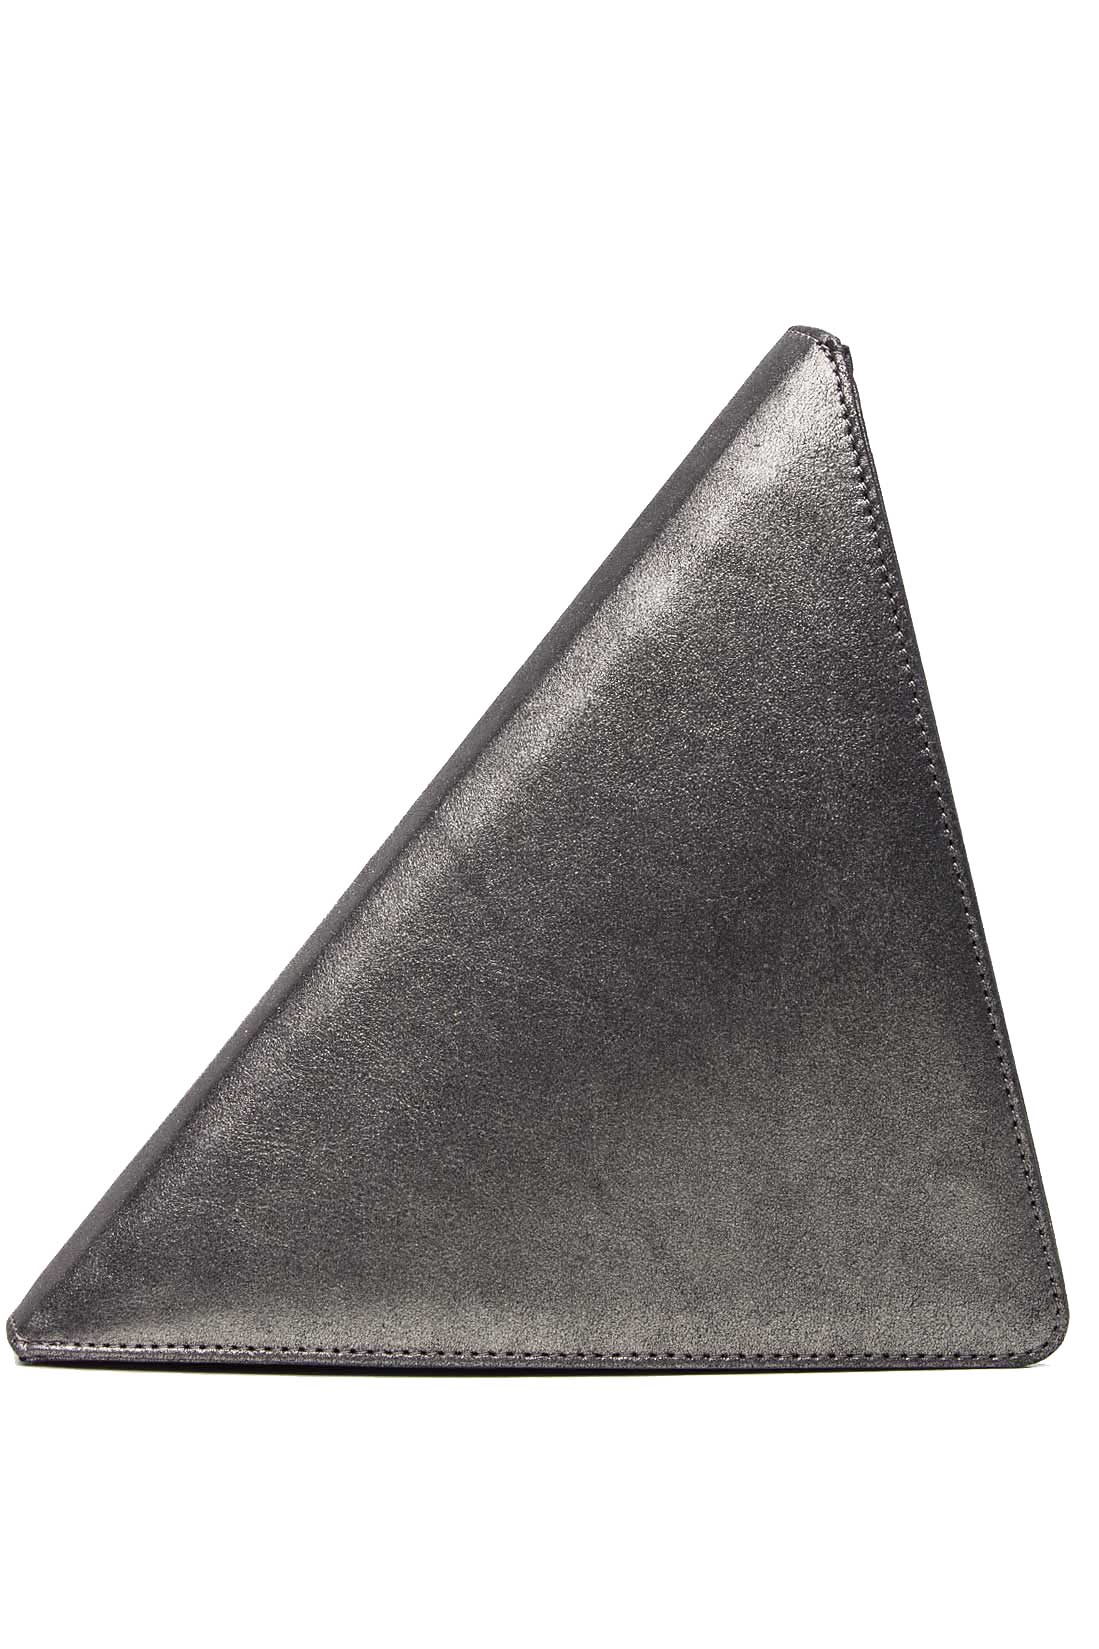 Leather triangle clutch Laura Olaru image 3